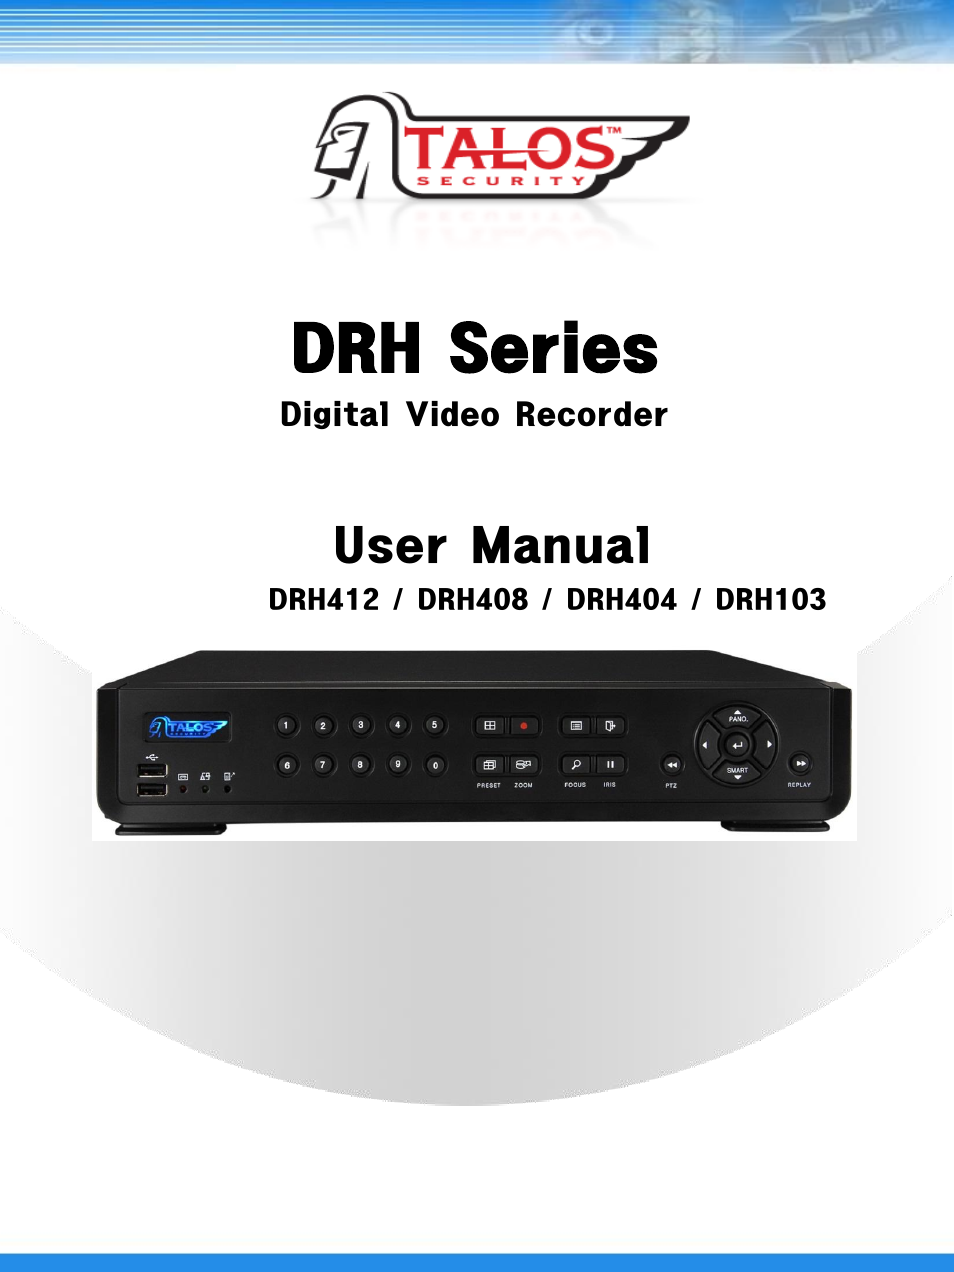 DRH408 Hybrid DVR Manual